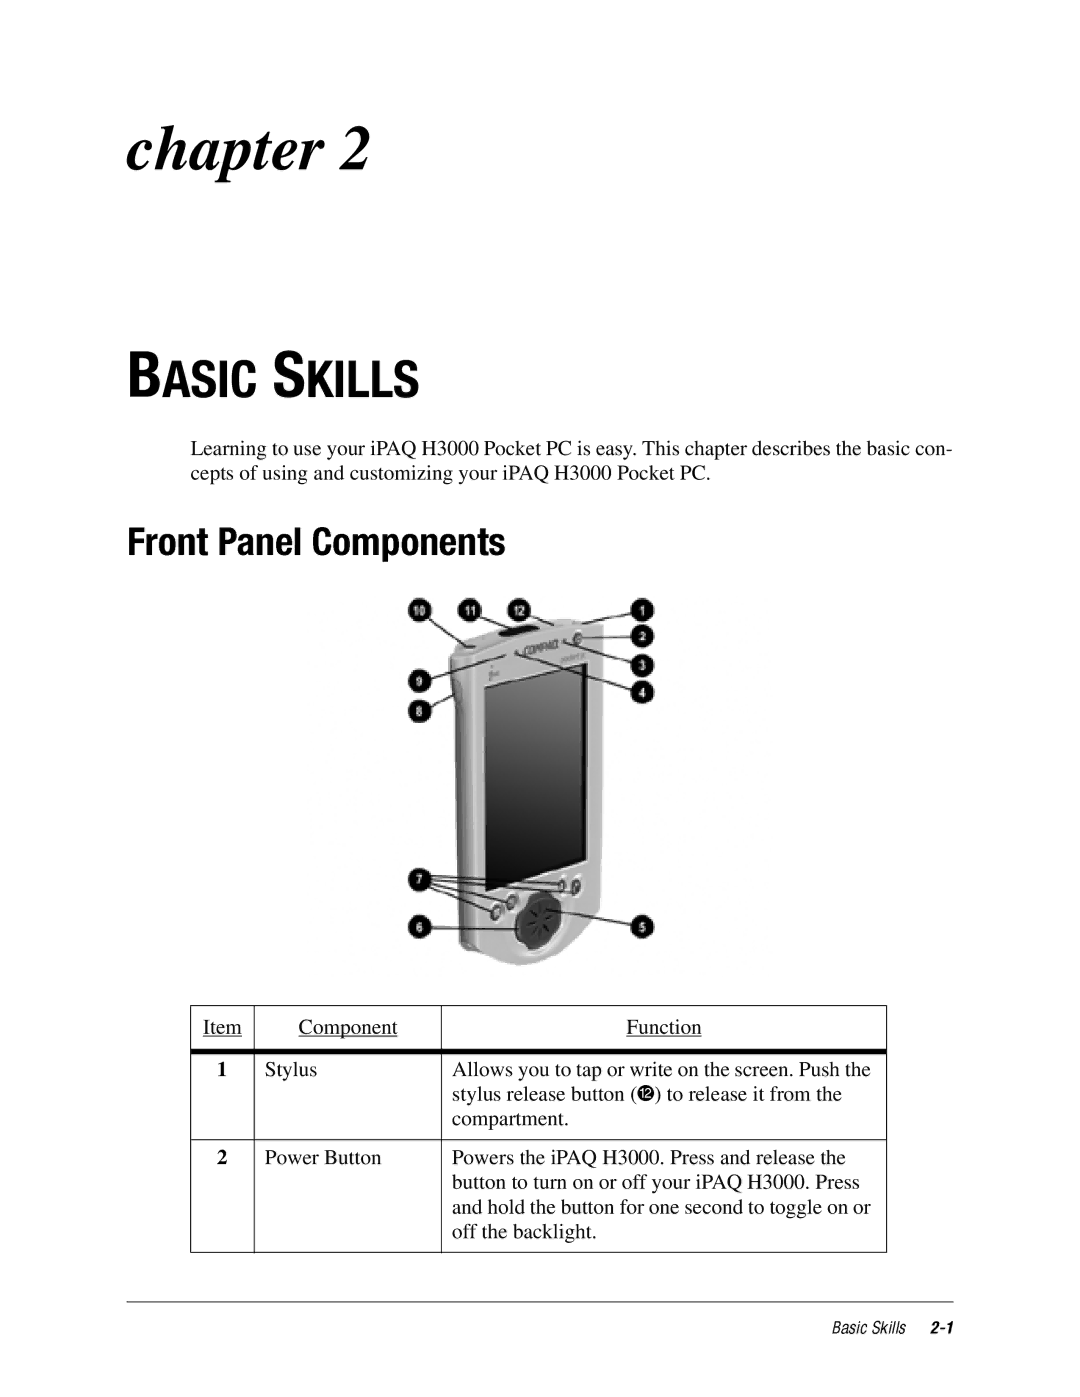 DeWalt IPAQ H3000 manual Basic Skills 